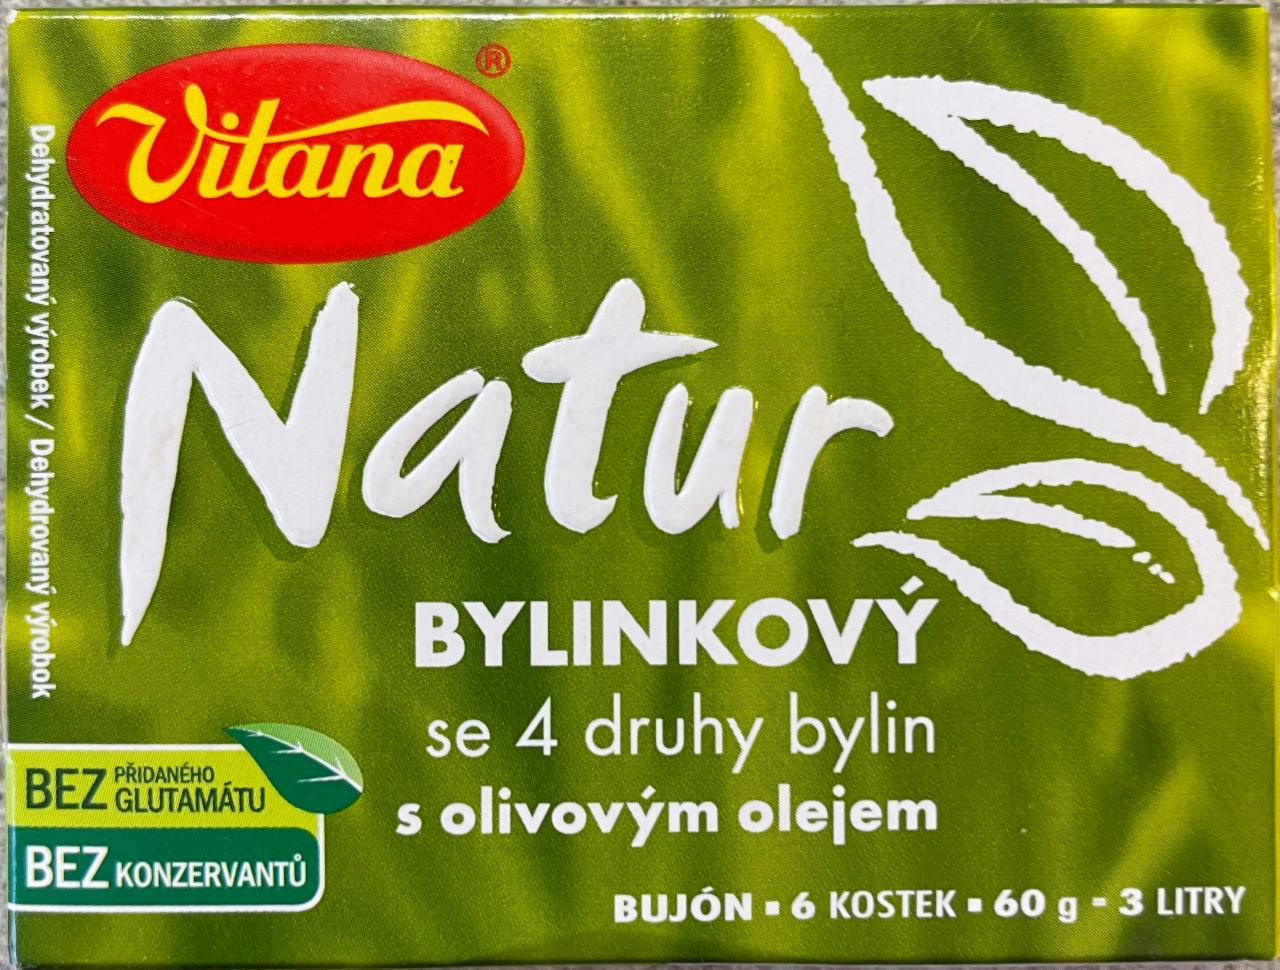 Fotografie - Natur bylinkový bujón Vitana